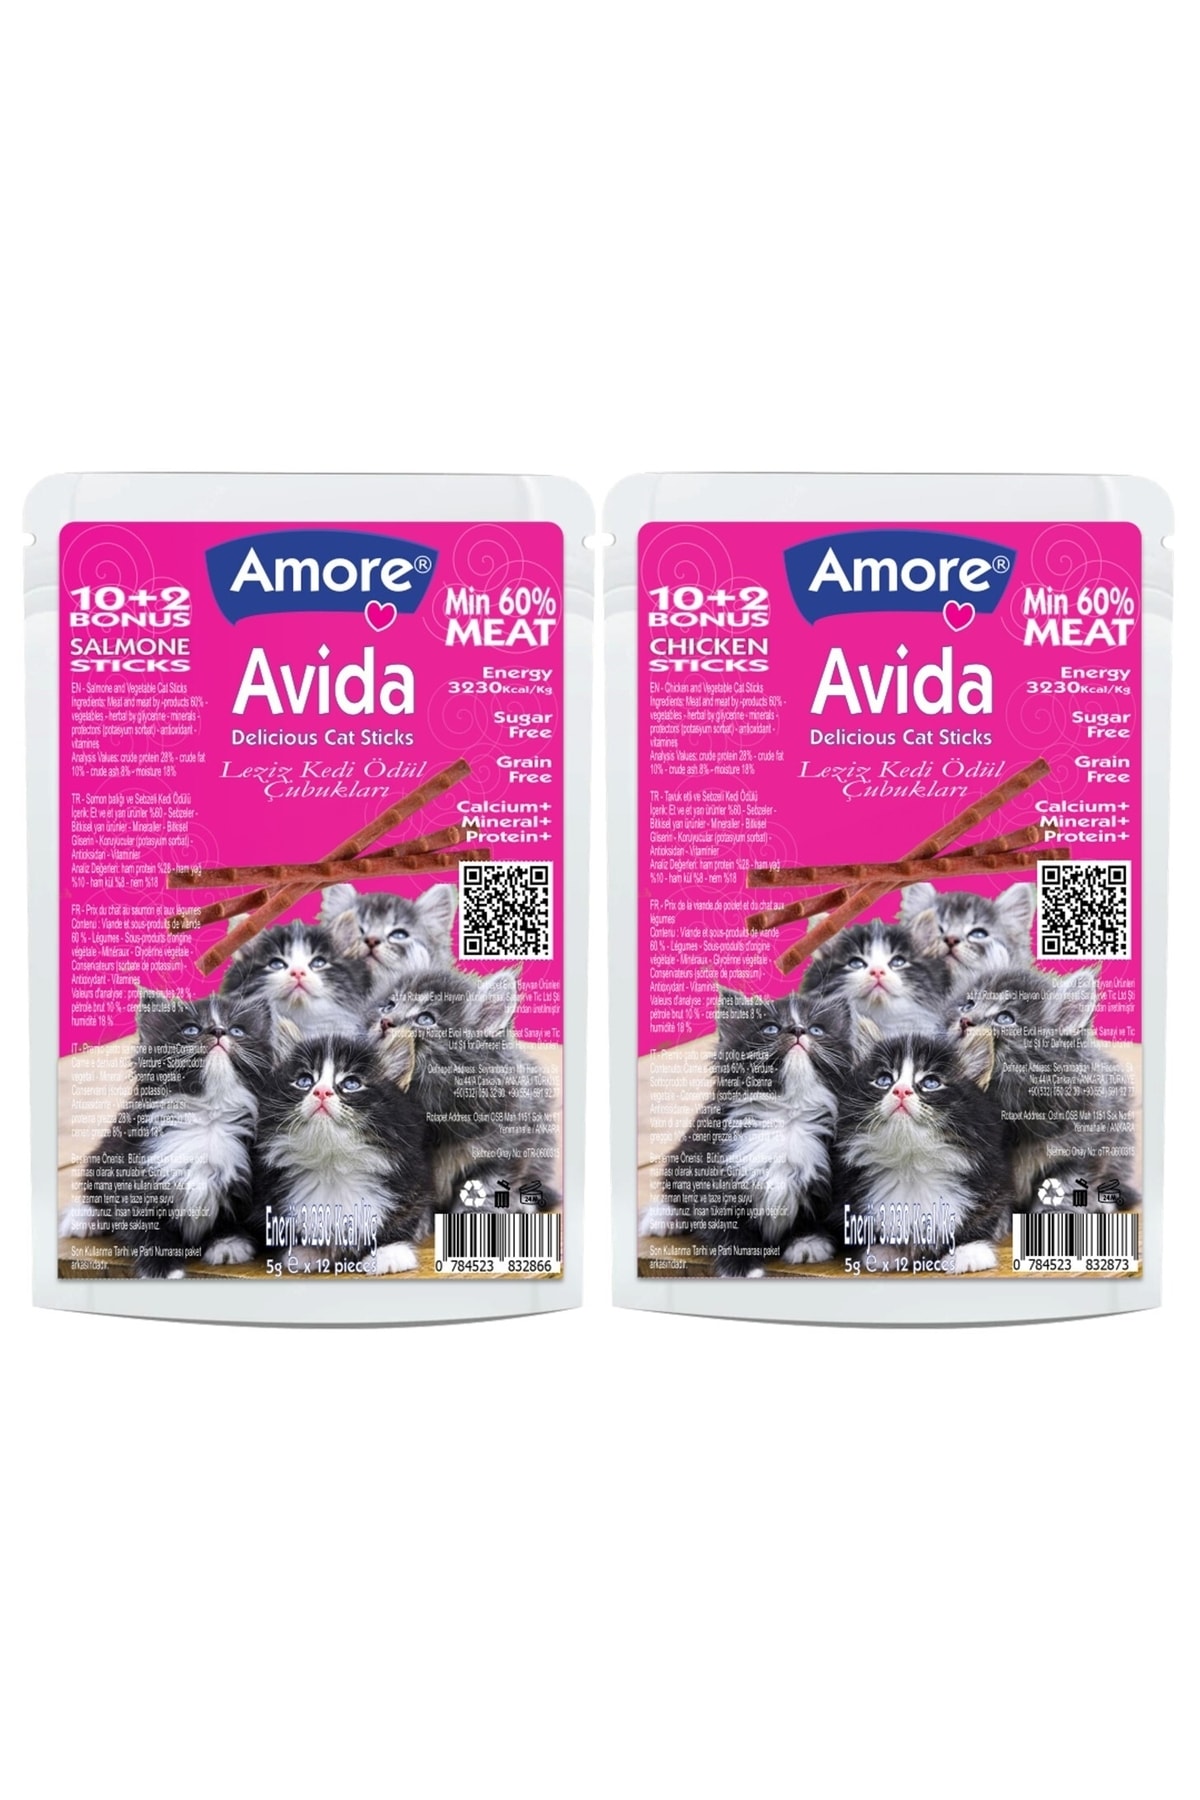 Amorecat Amore Avida Salmone-12 Ve Chicken-12 Cat Sticks Balikli Ve Tavuklu Tahilsiz Kedi Odul Cubuklari